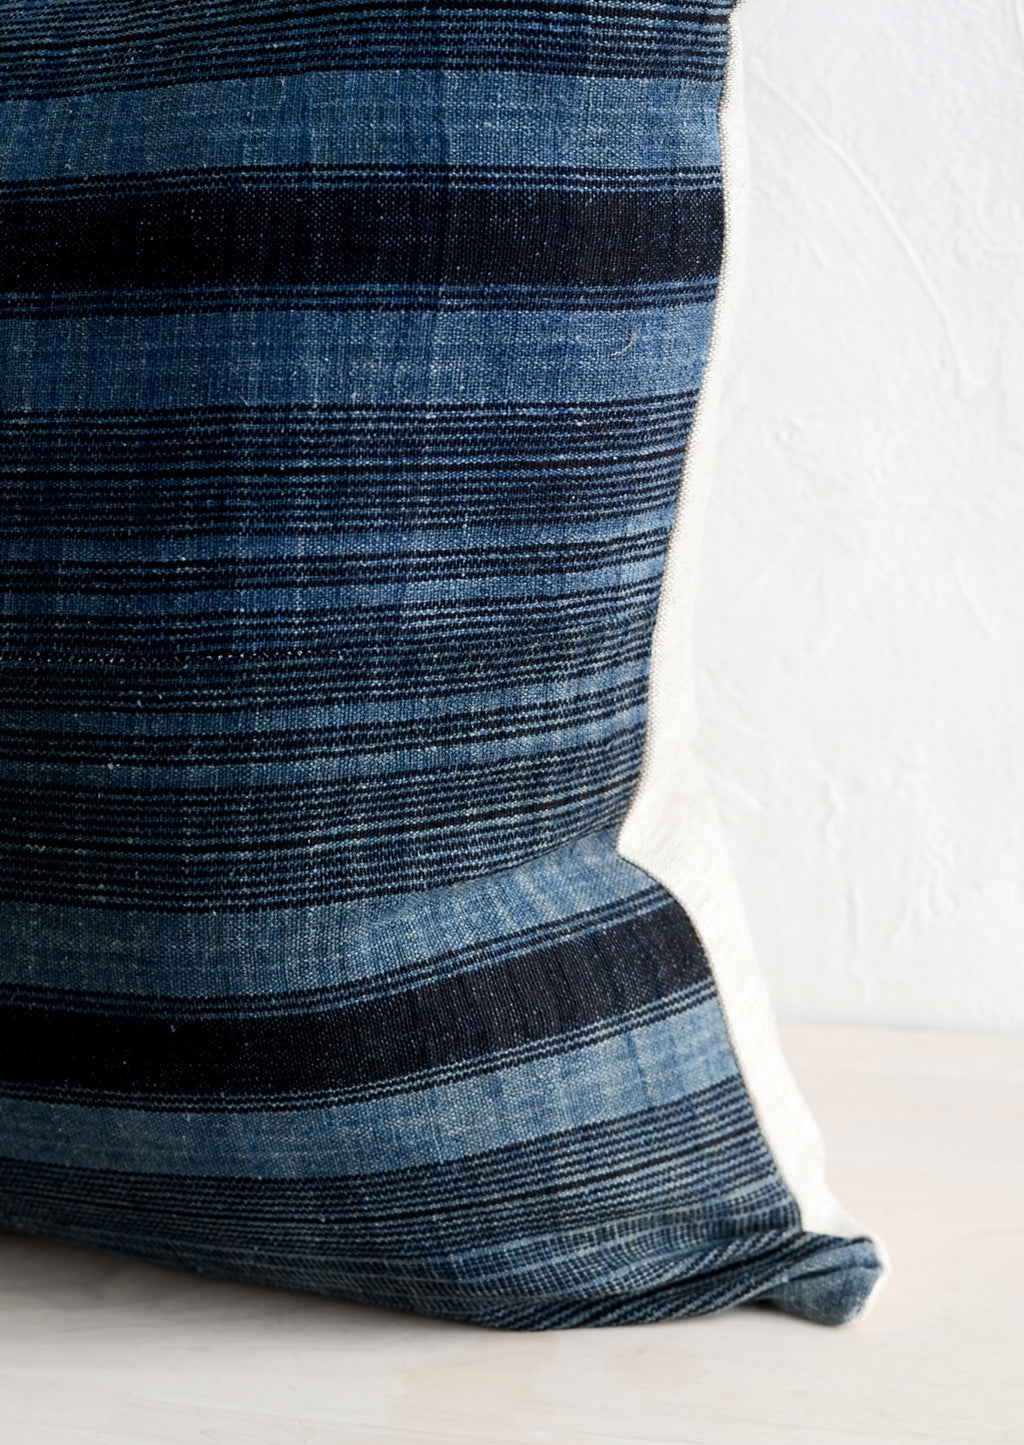 3: Indigo fabric with variegated black stripes.